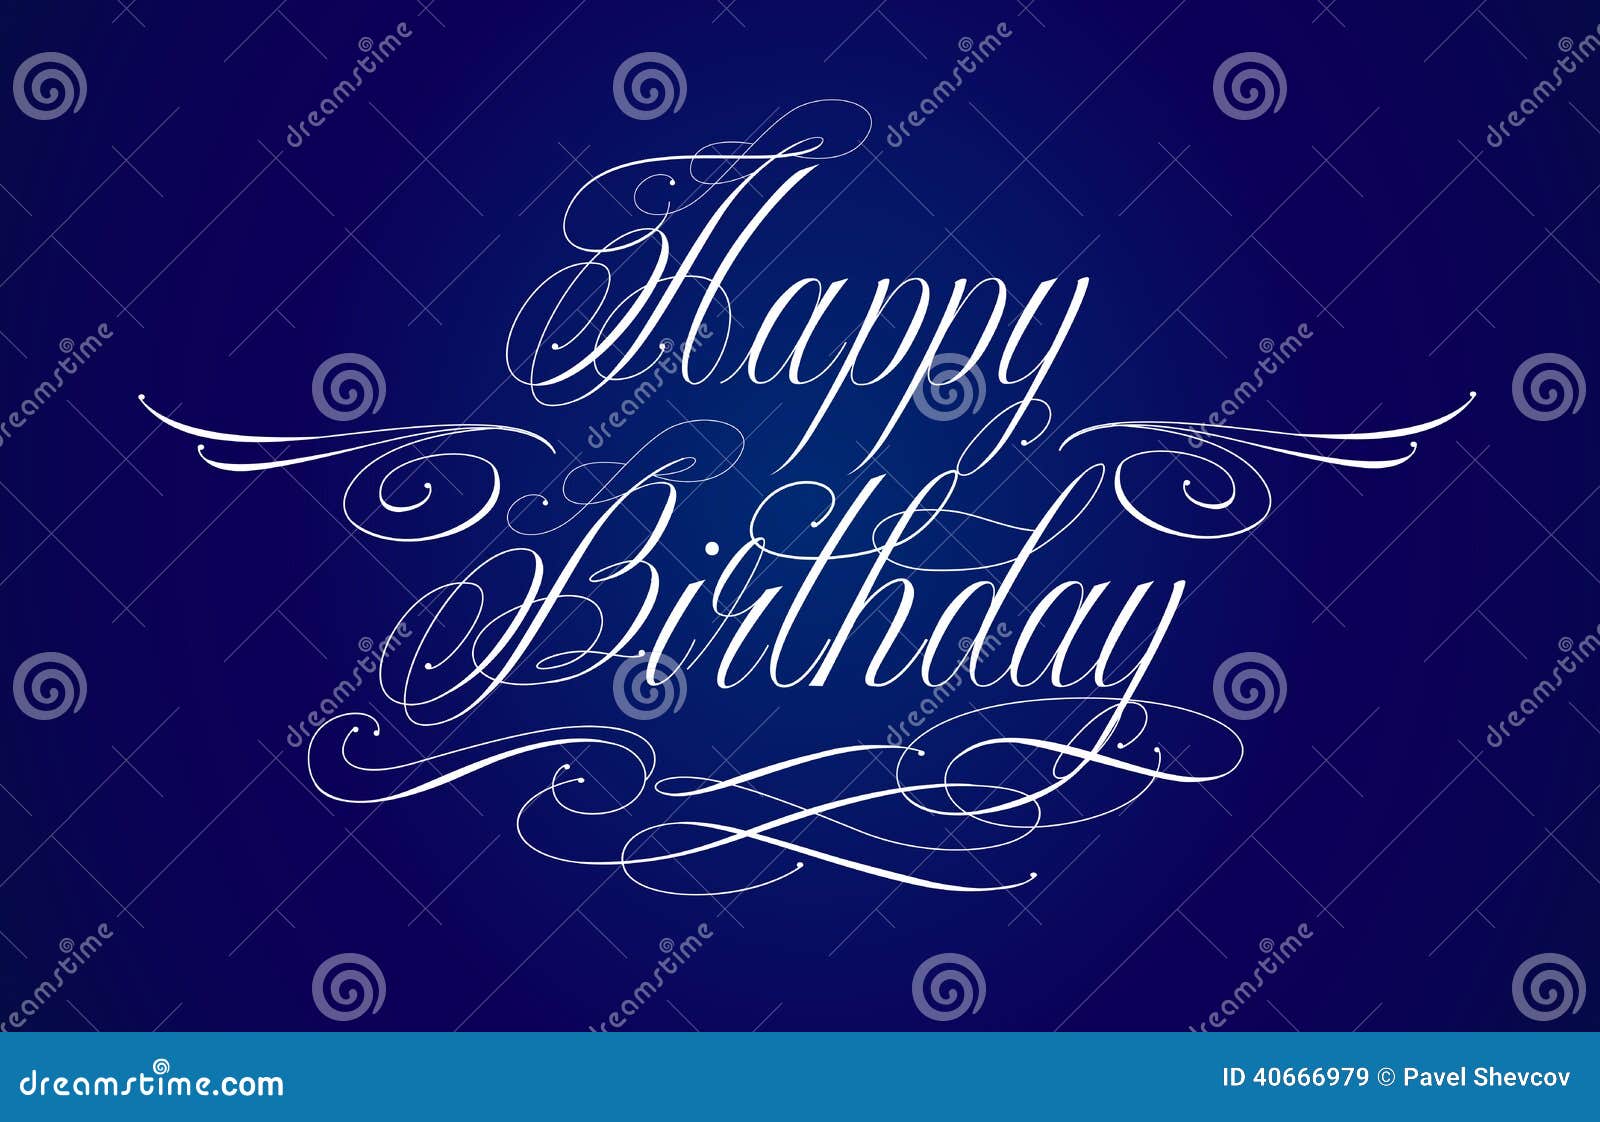 Tattoo Birthday Card Goth Birthday Wishes Card Alternative Birthday Card  Gothic Card  Amazoncouk Stationery  Office Supplies